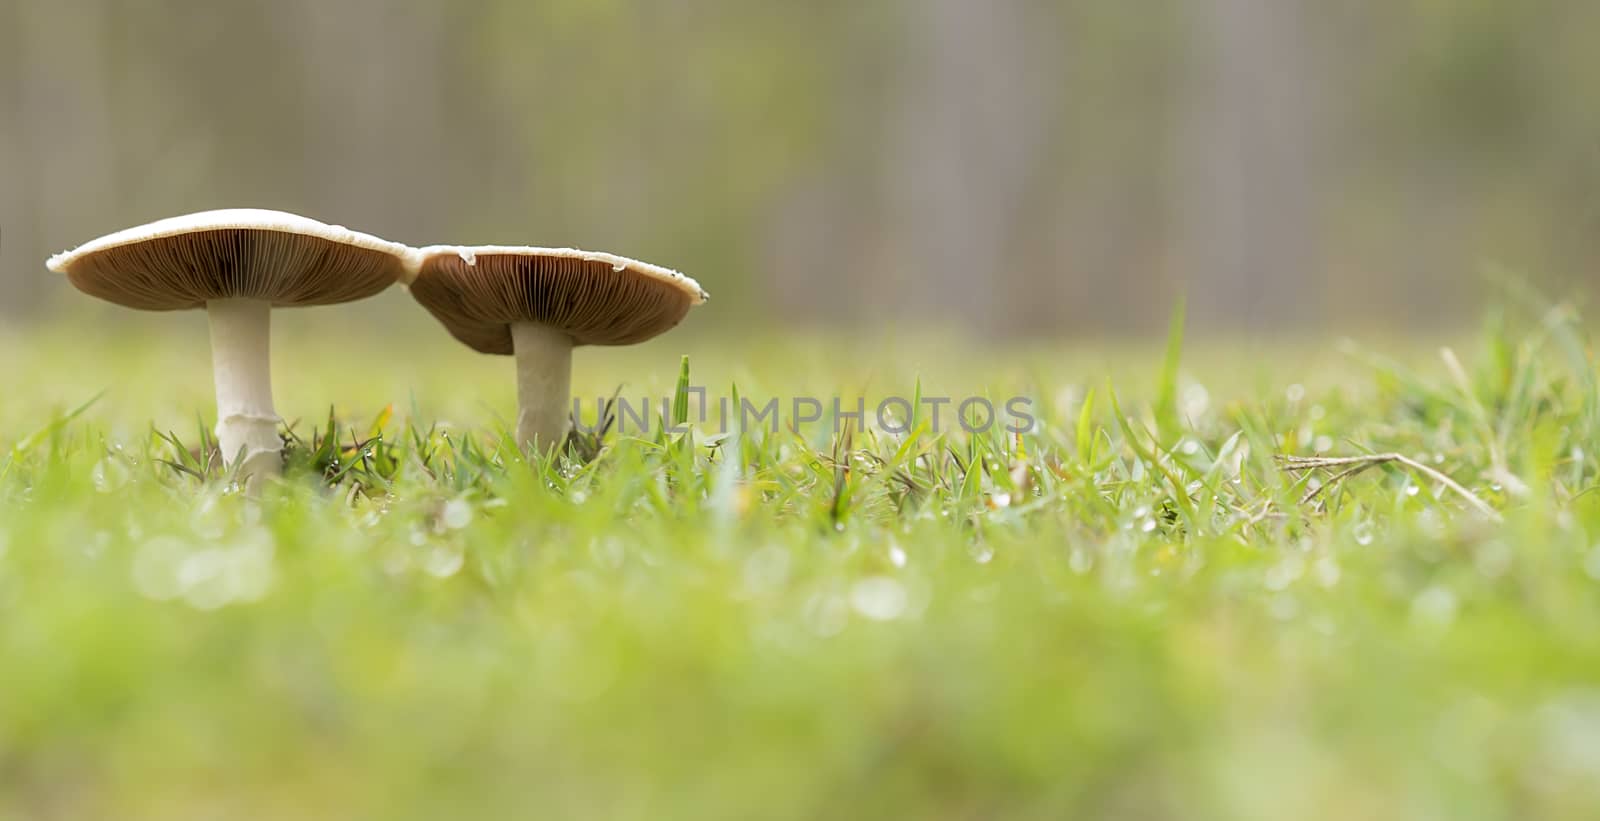 Two live wild mushrooms growing panorama by sherj